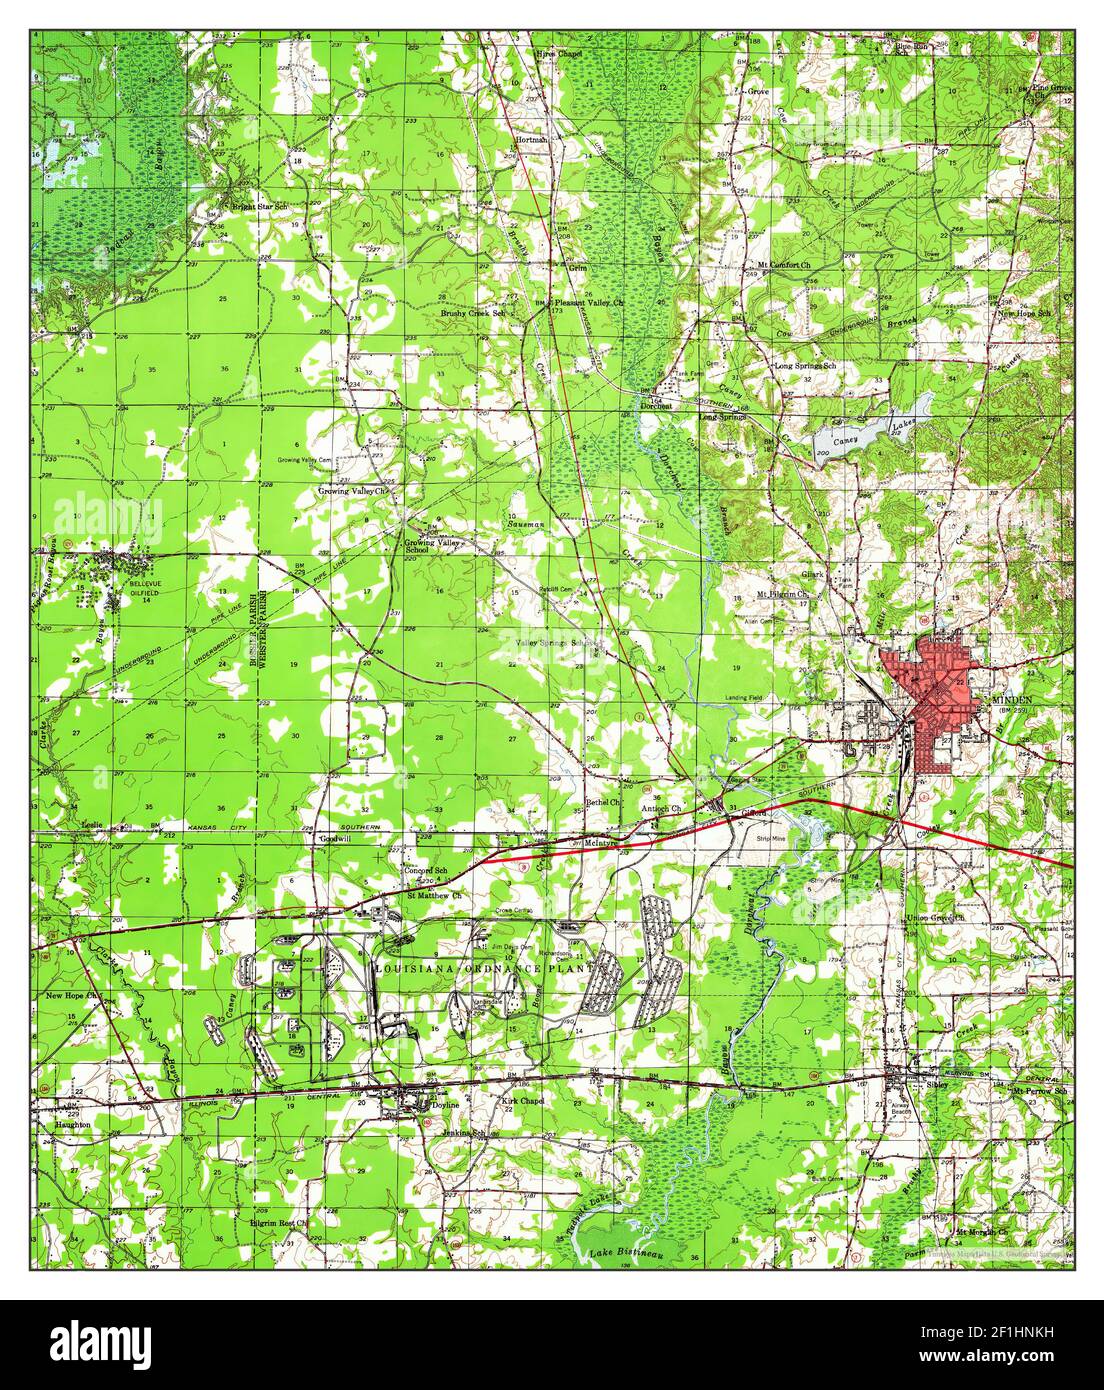 Minden, Louisiana, map 1947, 1:62500, United States of America by Timeless Maps, data U.S. Geological Survey Stock Photo